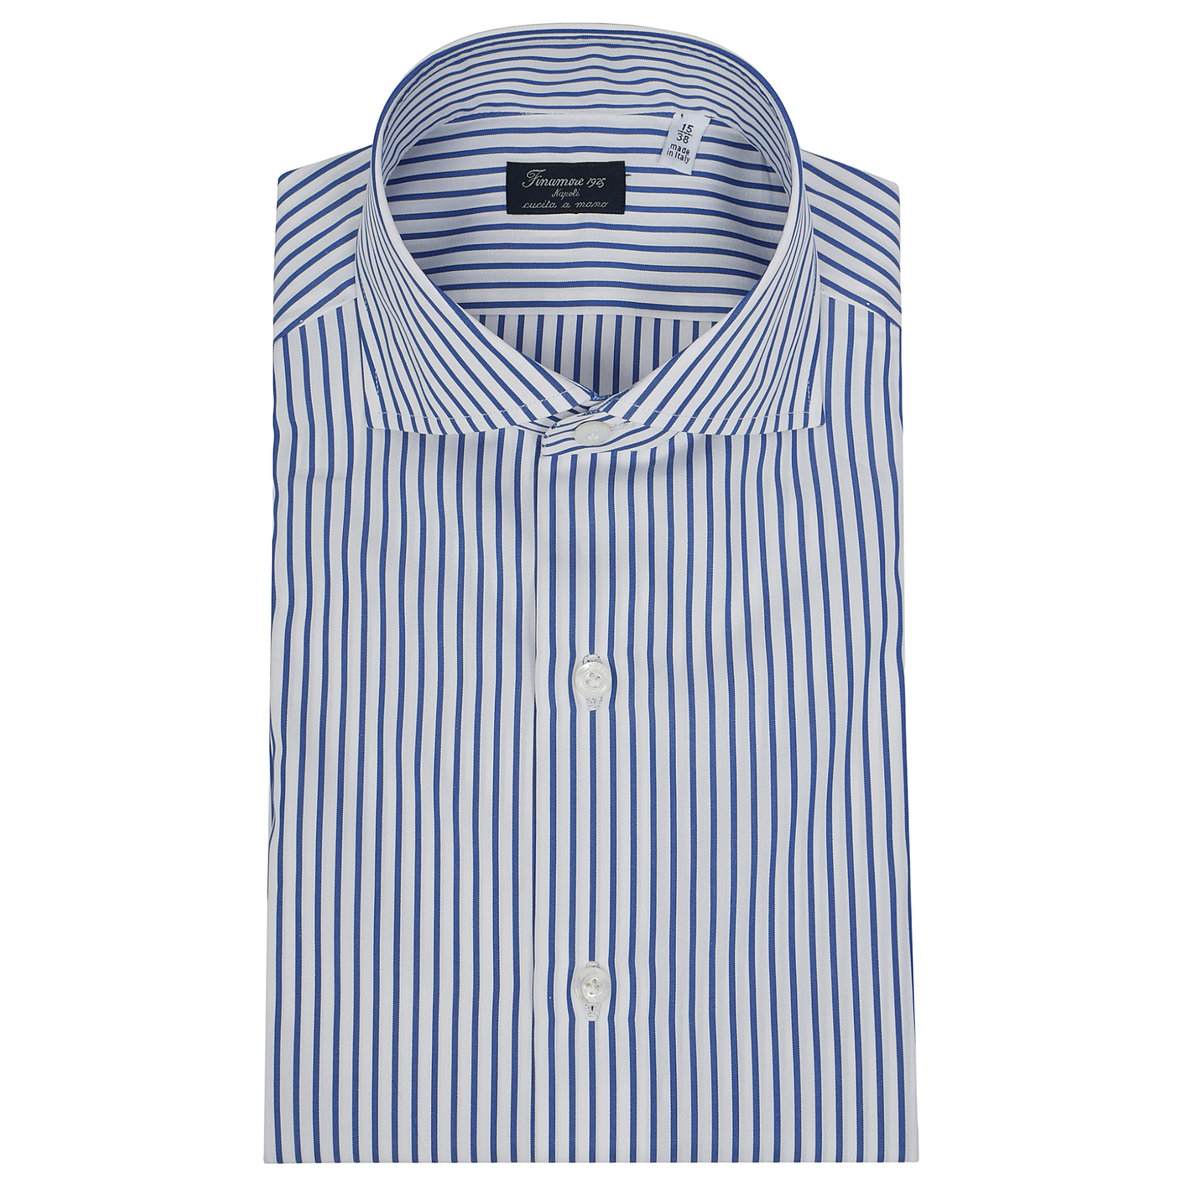 Classic shirt Napoli popeline cotton stripe medium blue Eduardo Finamore 1925